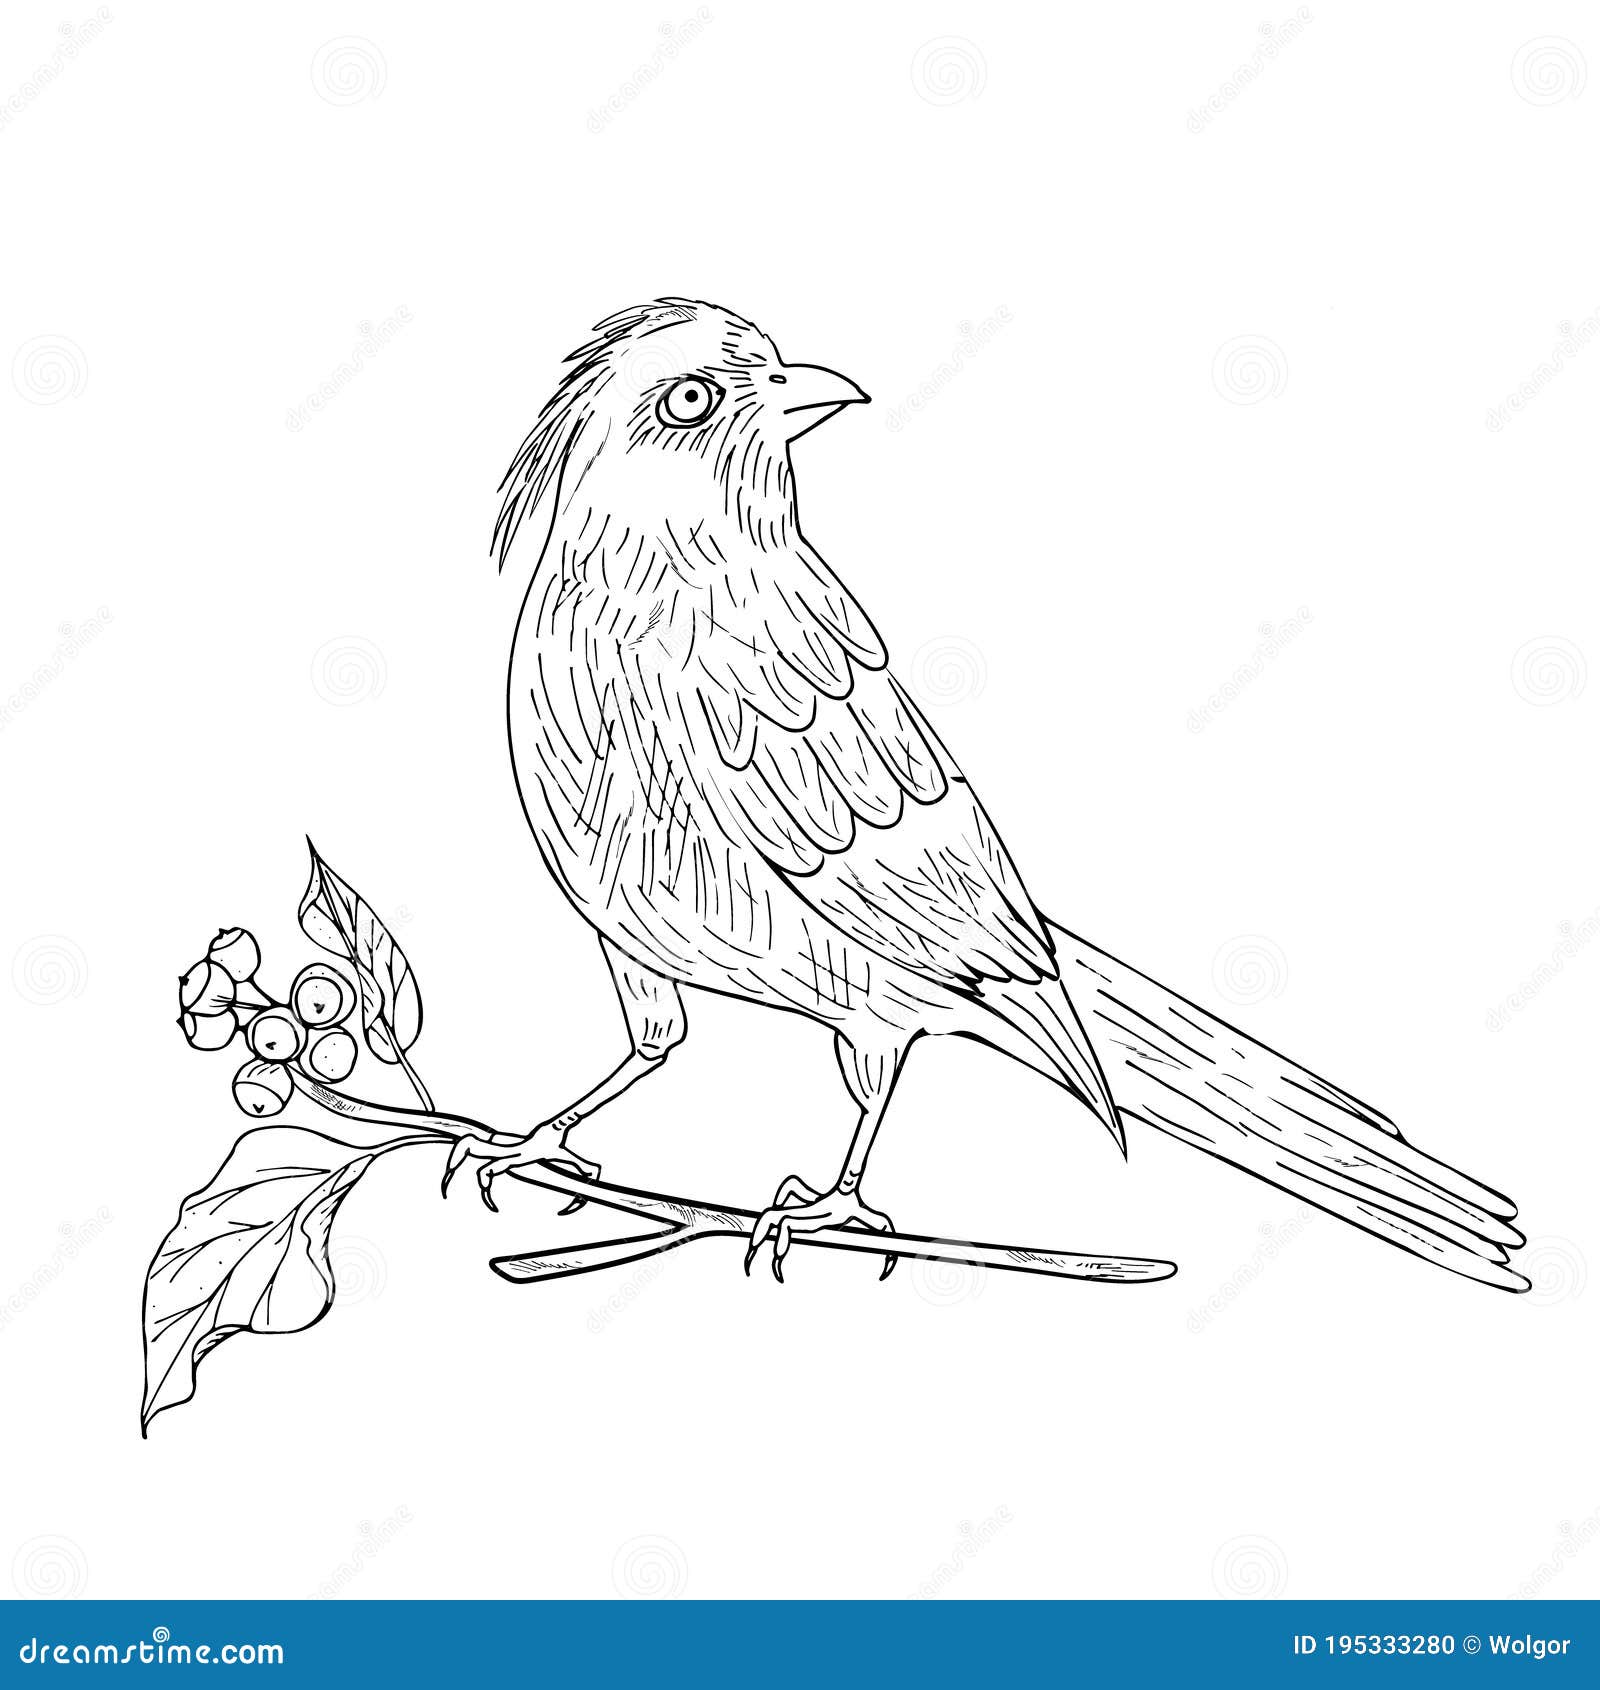 SIngle needle pine tree and cardinal bird hanging on a